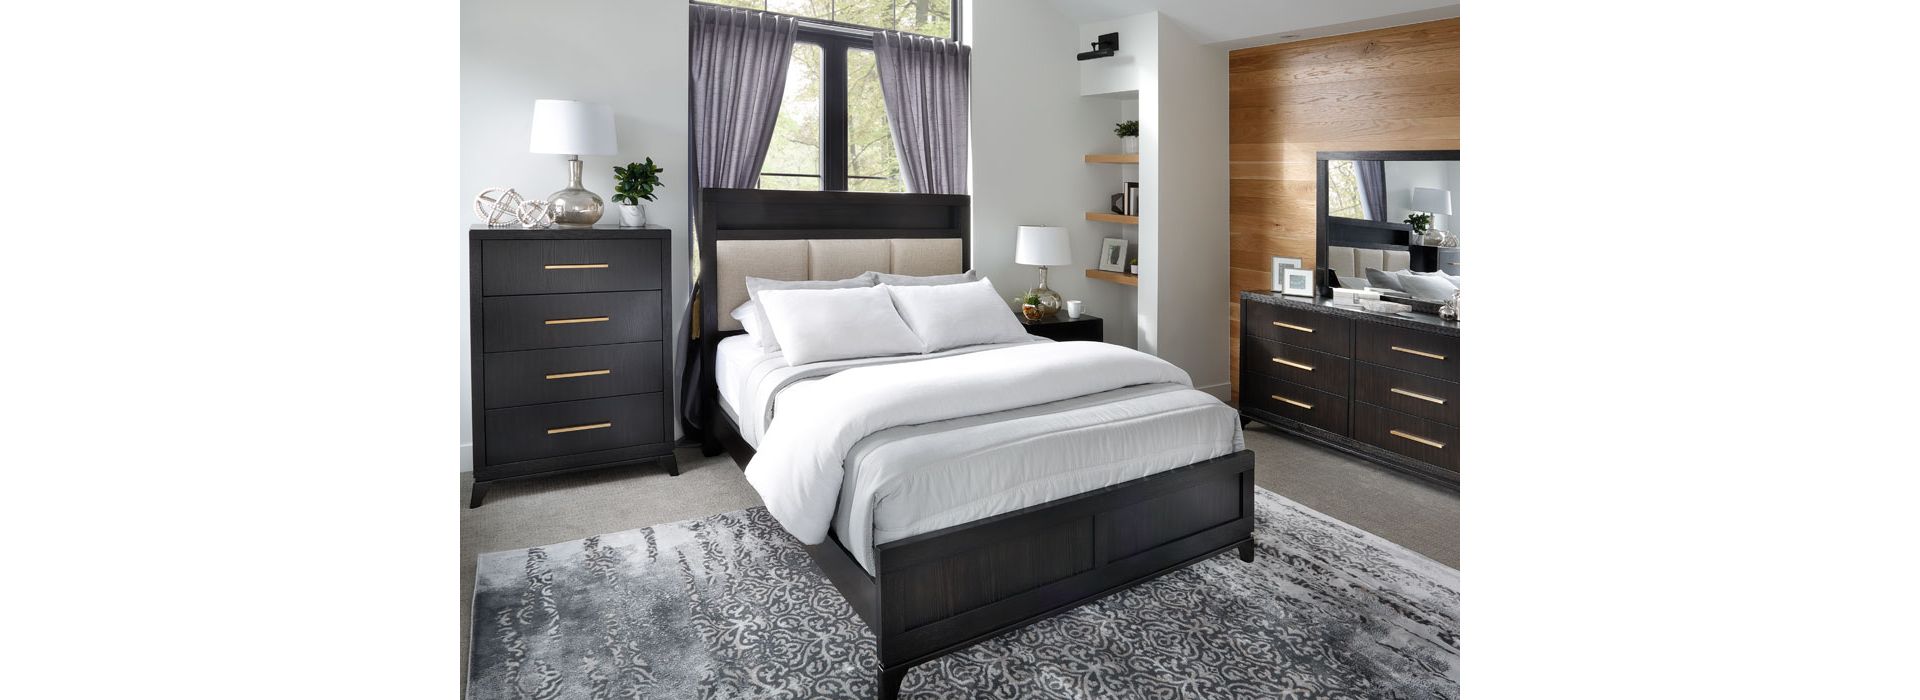 Dark Brown Wooden Bedroom set with light beige upholstered headboard with storage shelf. Bedroom set in bedroom with stylish wood accent wall and natural light. 